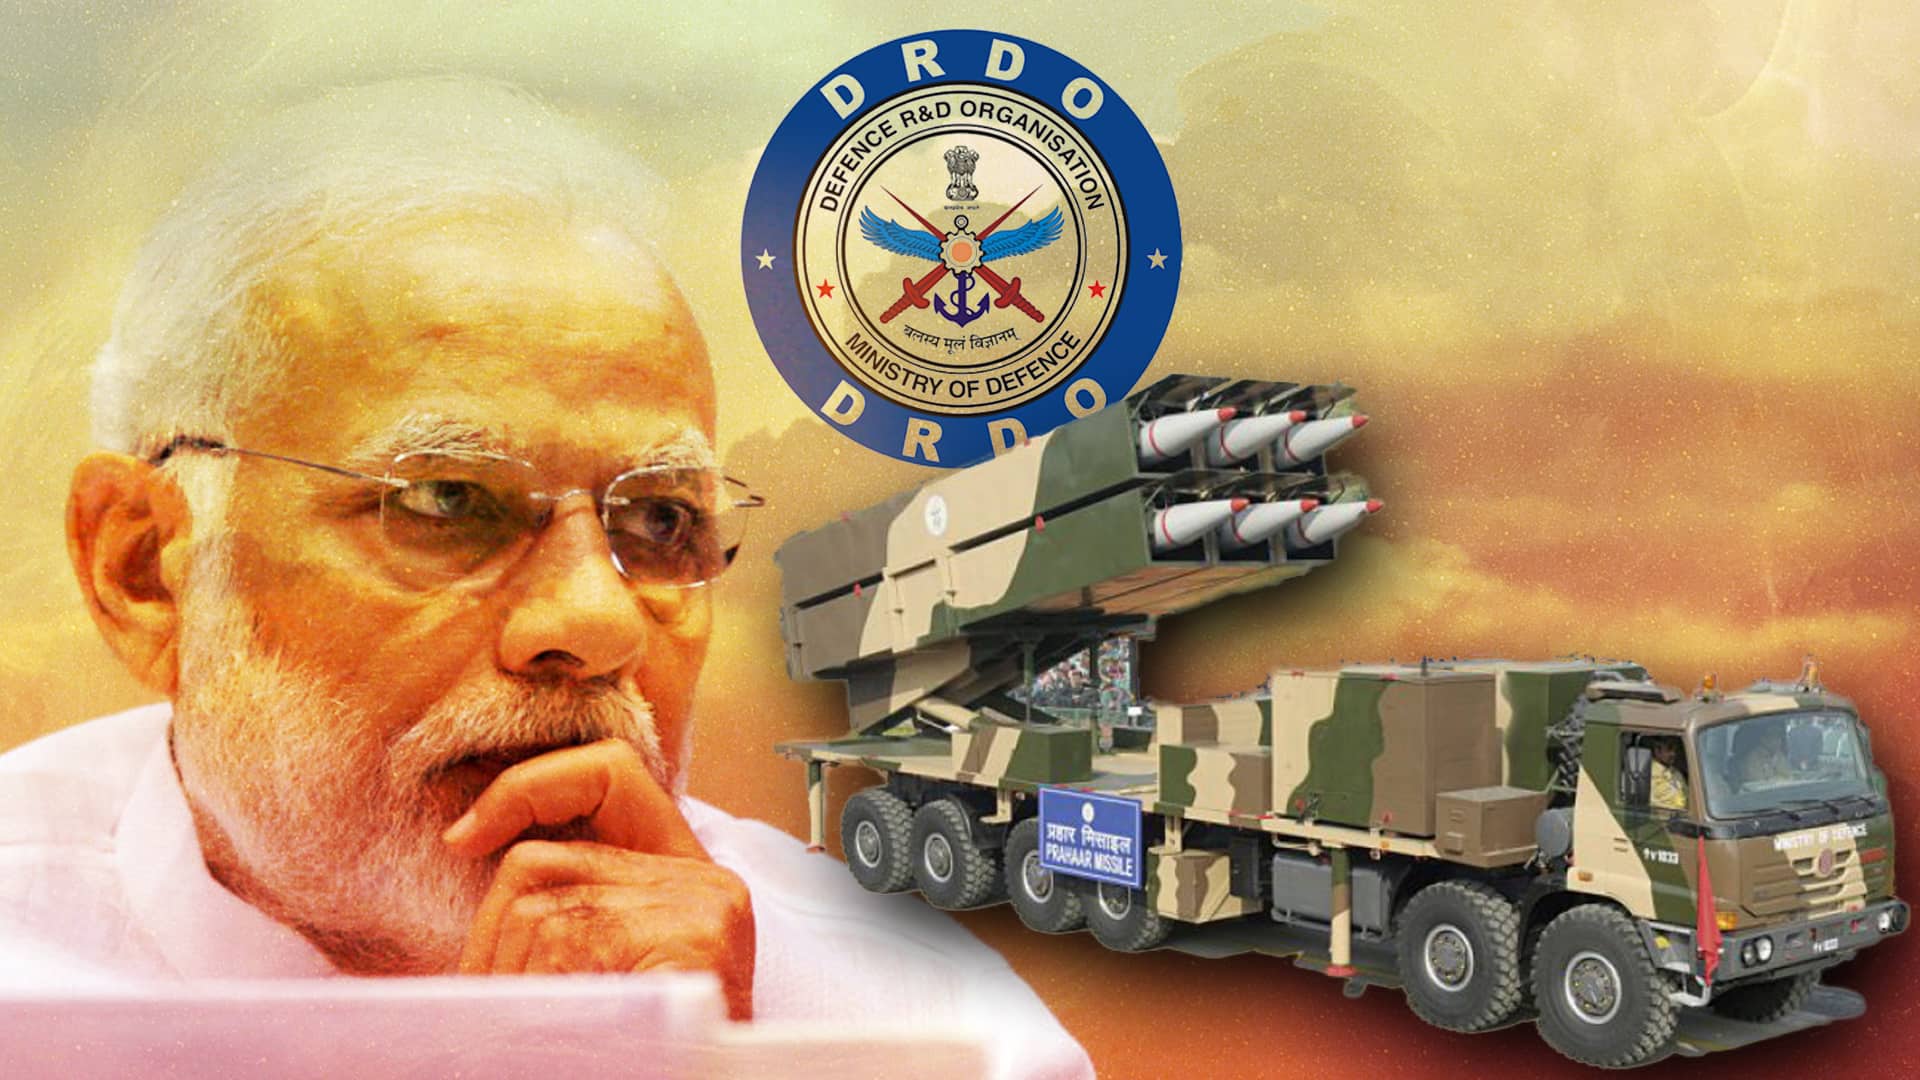 India successfully test fires 150 km range Prahaar ballistic missile